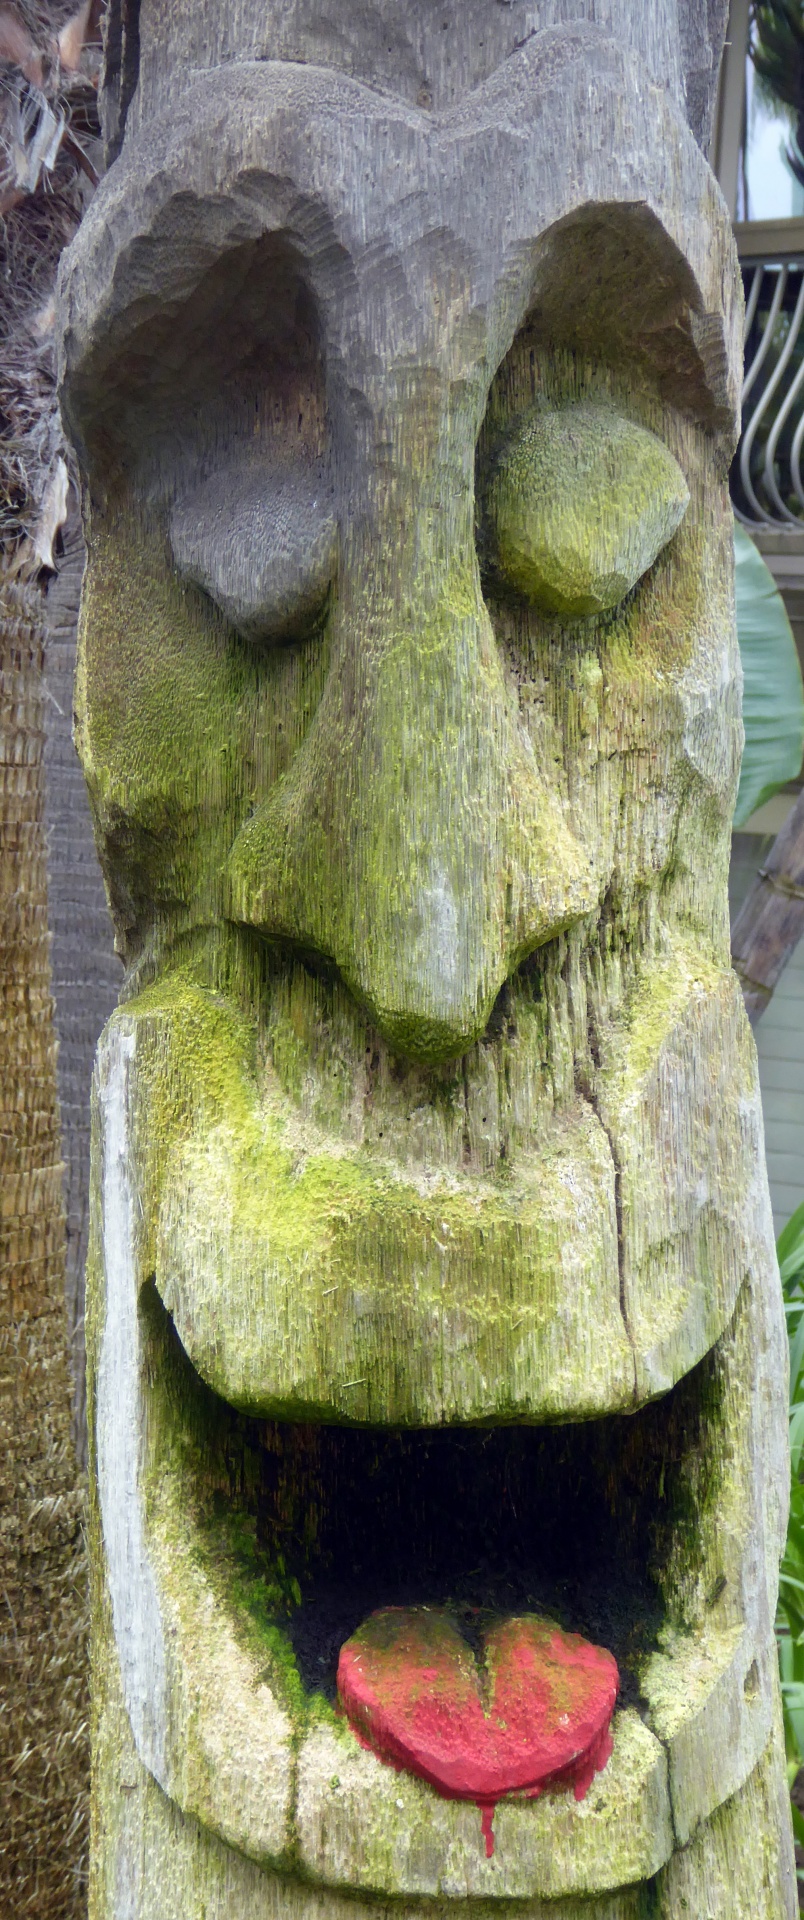 Totem Pole Face